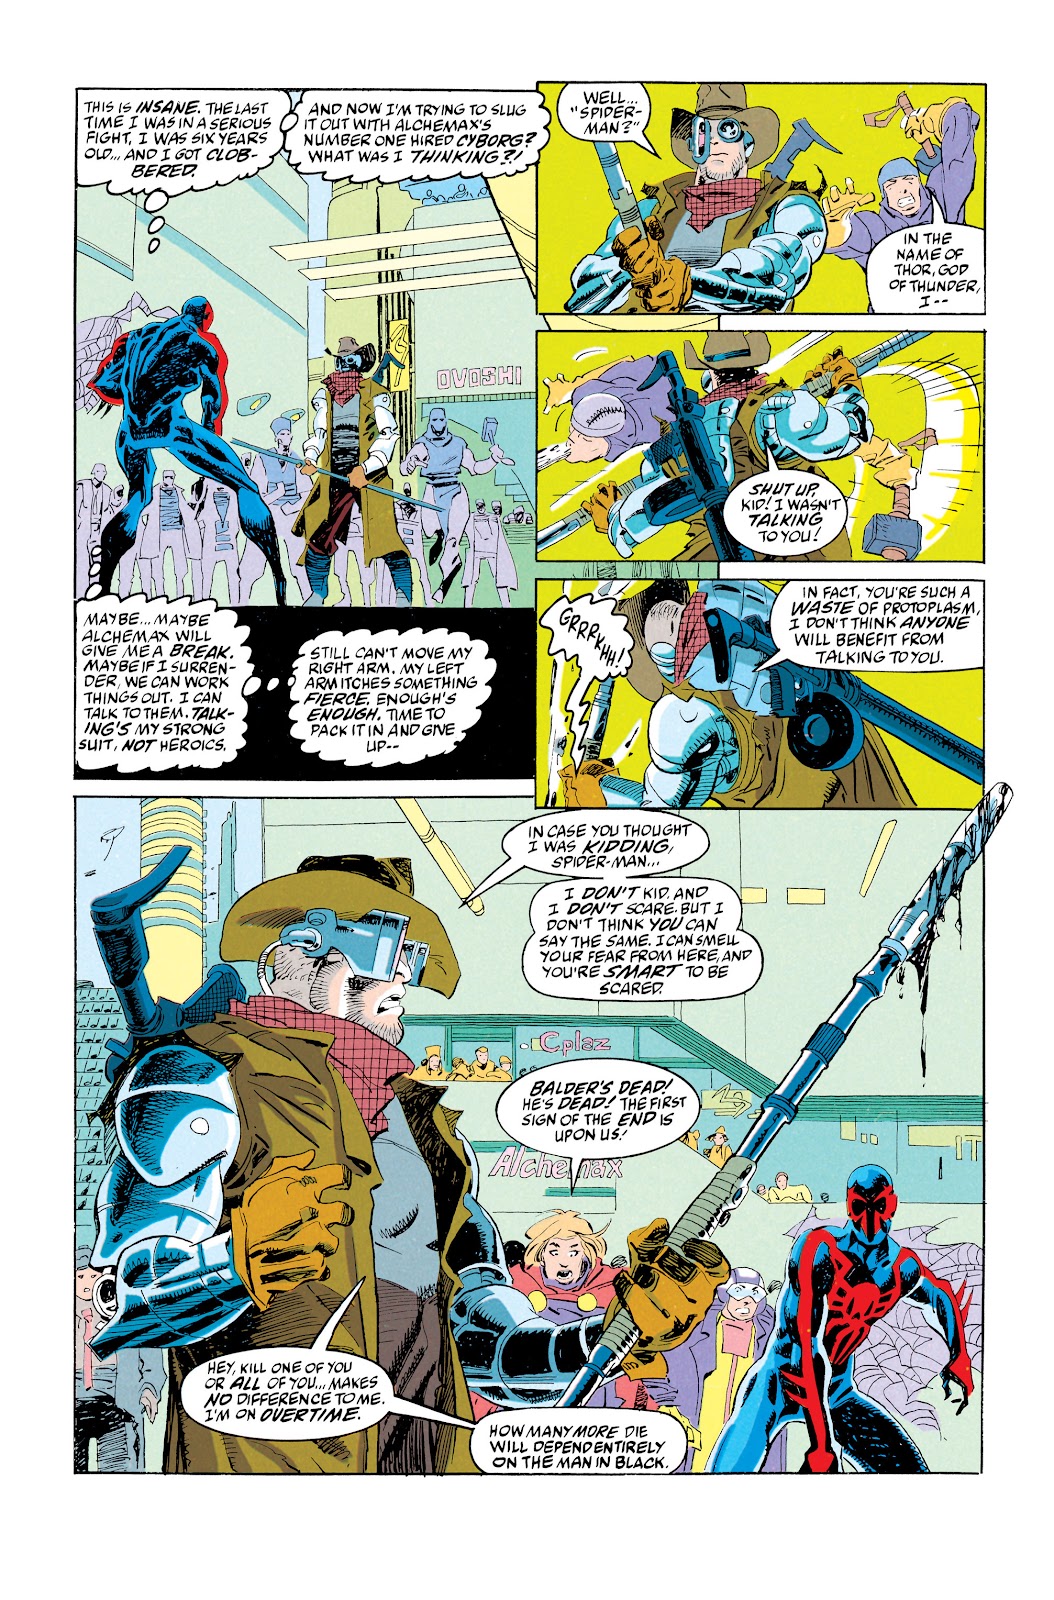 Spider-Man 2099 (1992) issue 3 - Page 5